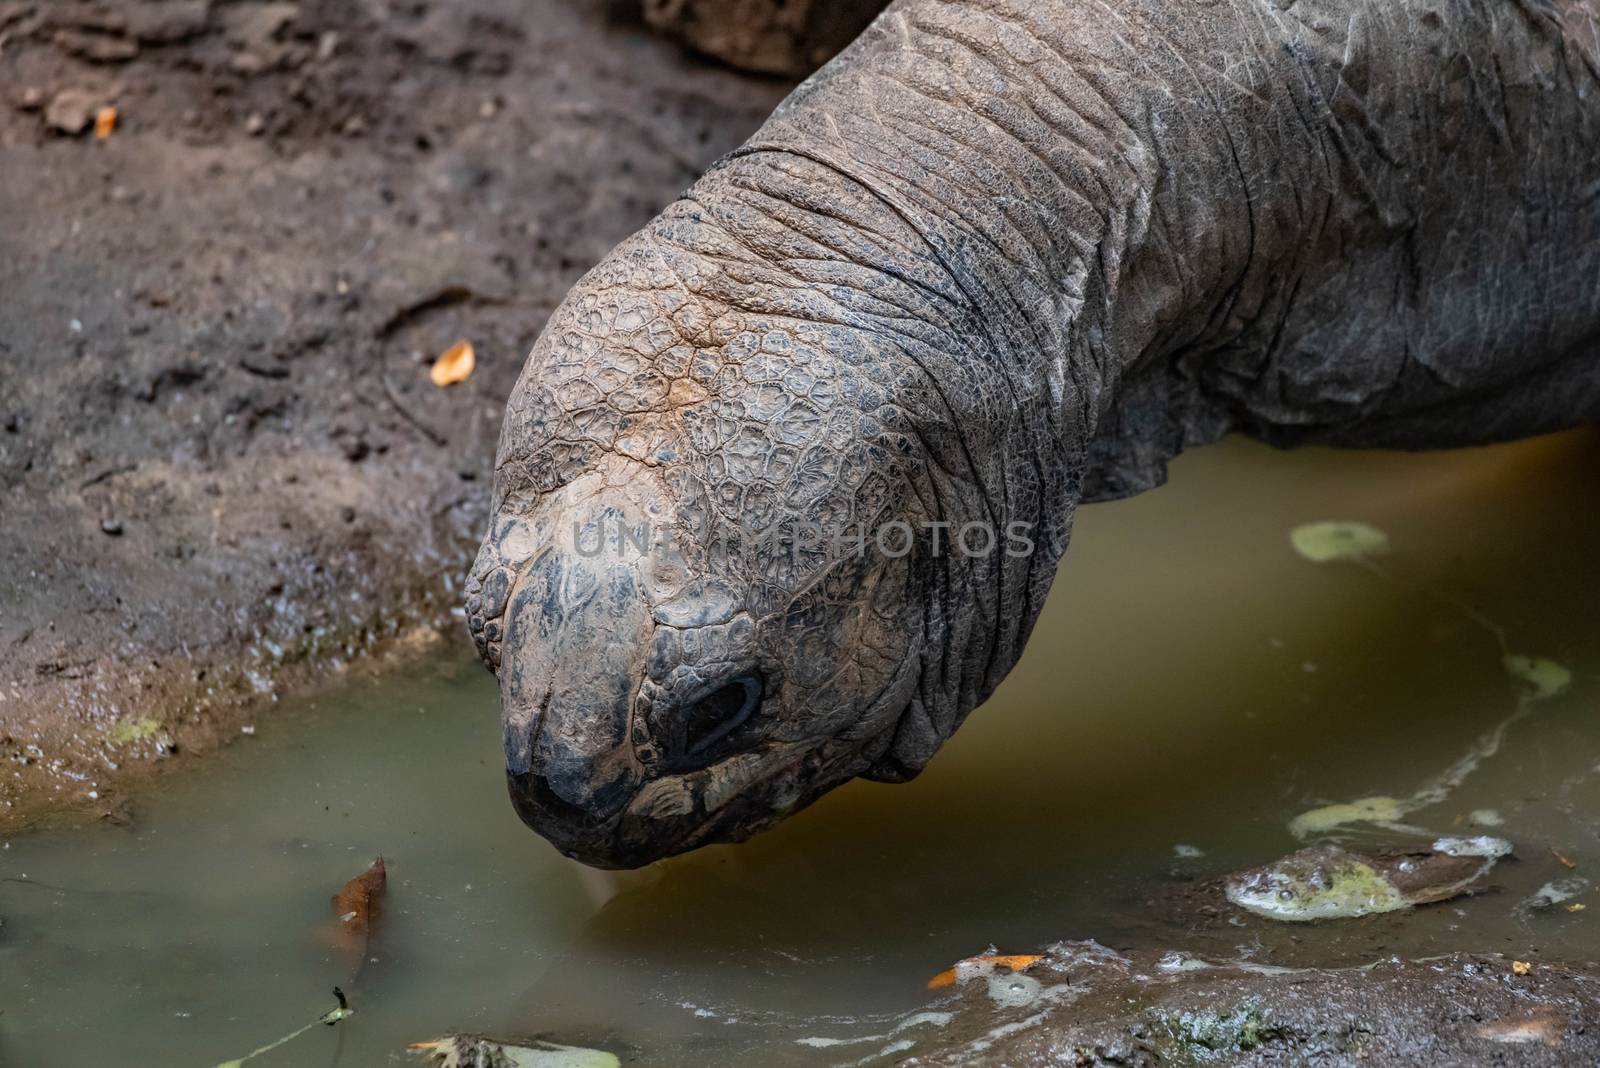 Aldabra Tortoise drinking at a pond.